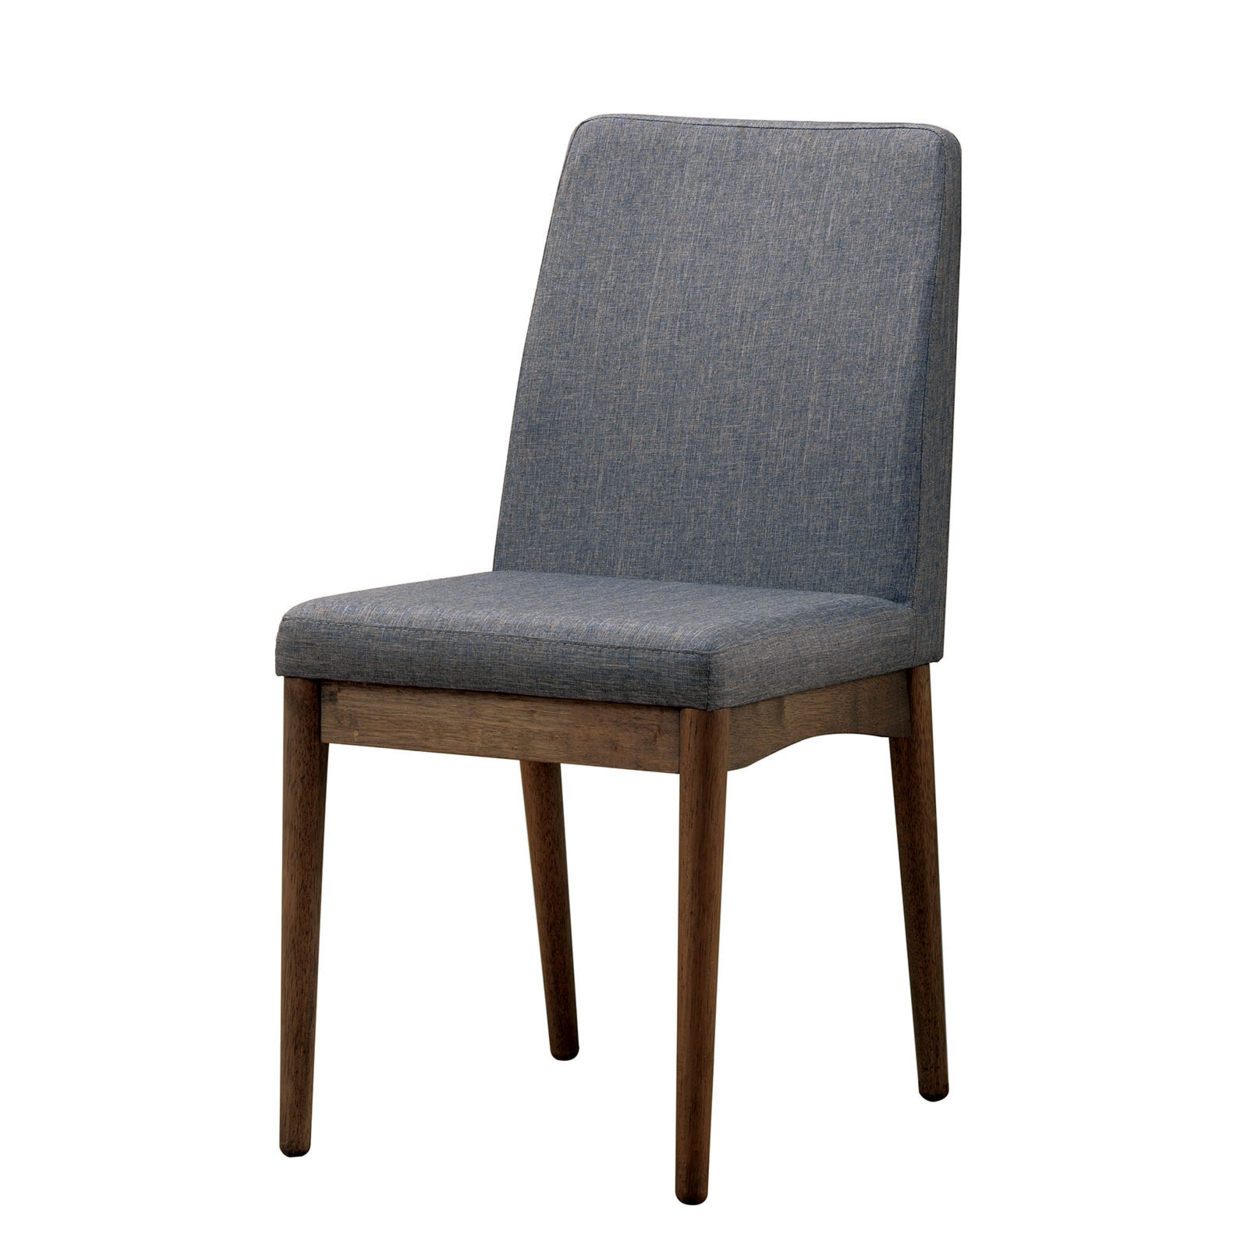 Eindride Mid Century Modern Side Chair Set Of 2- Saltoro Sherpi